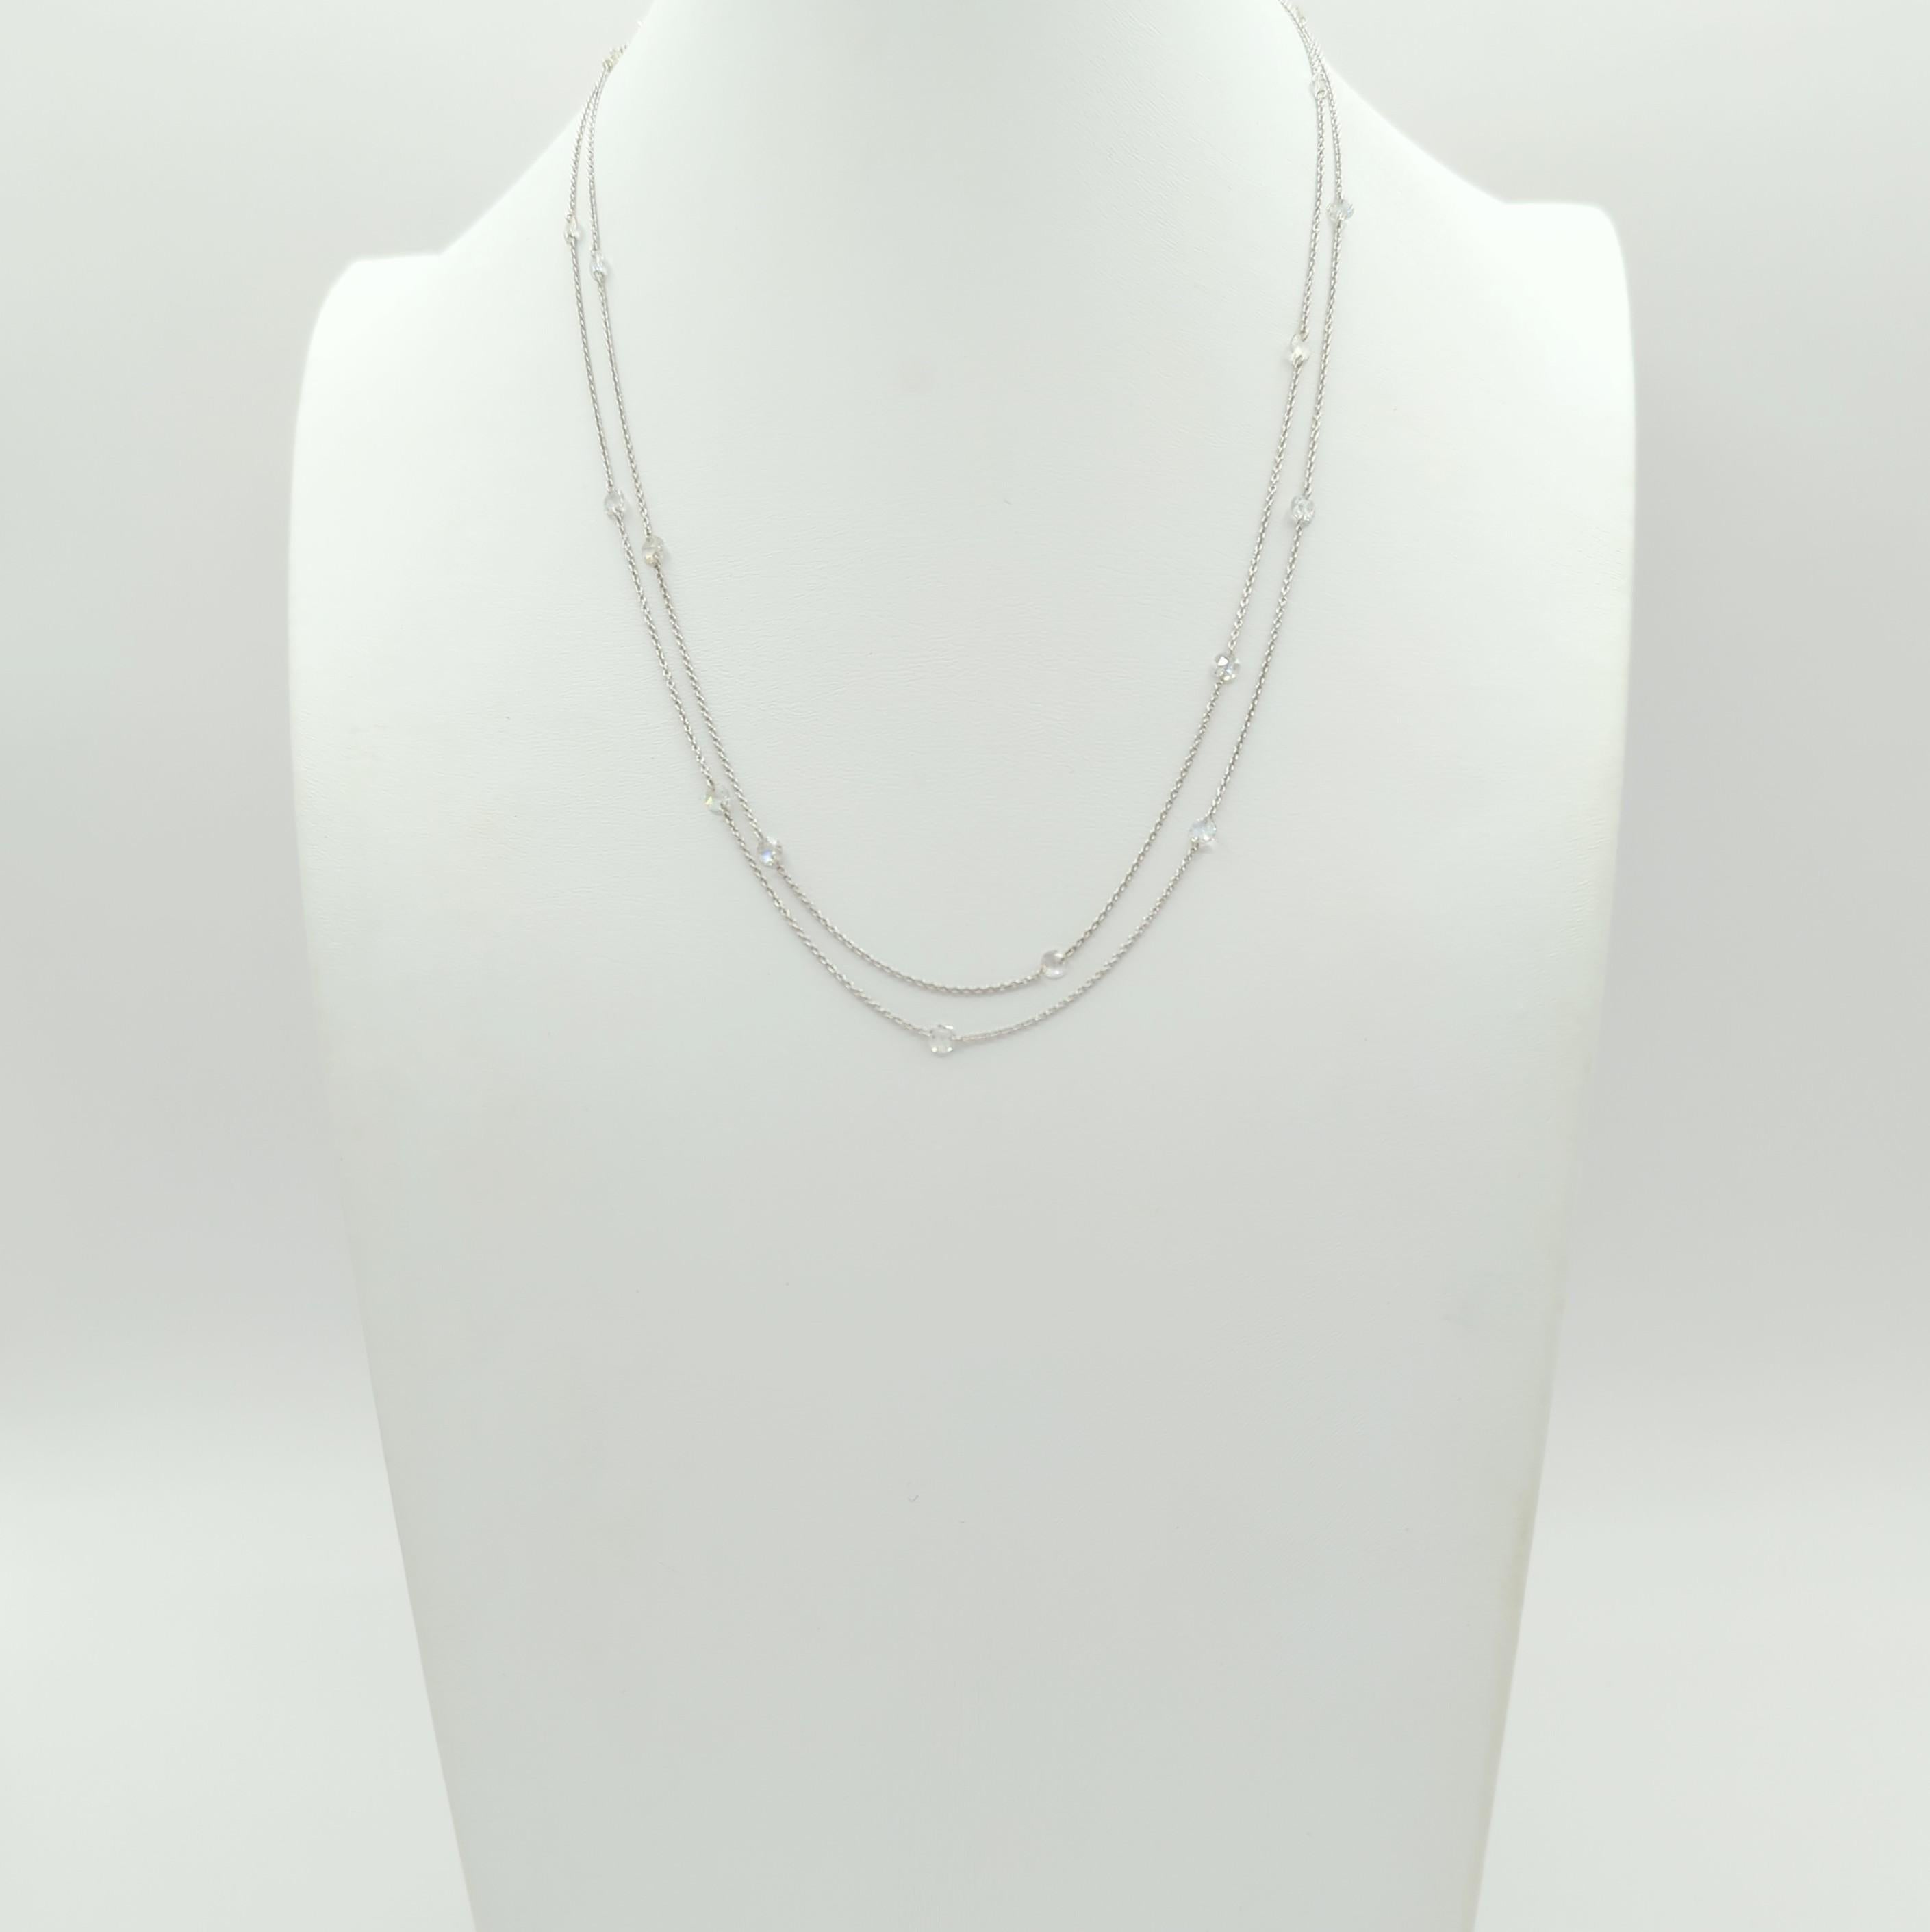 Women's or Men's Rose Cut White Diamond Necklace in 18K White Gold